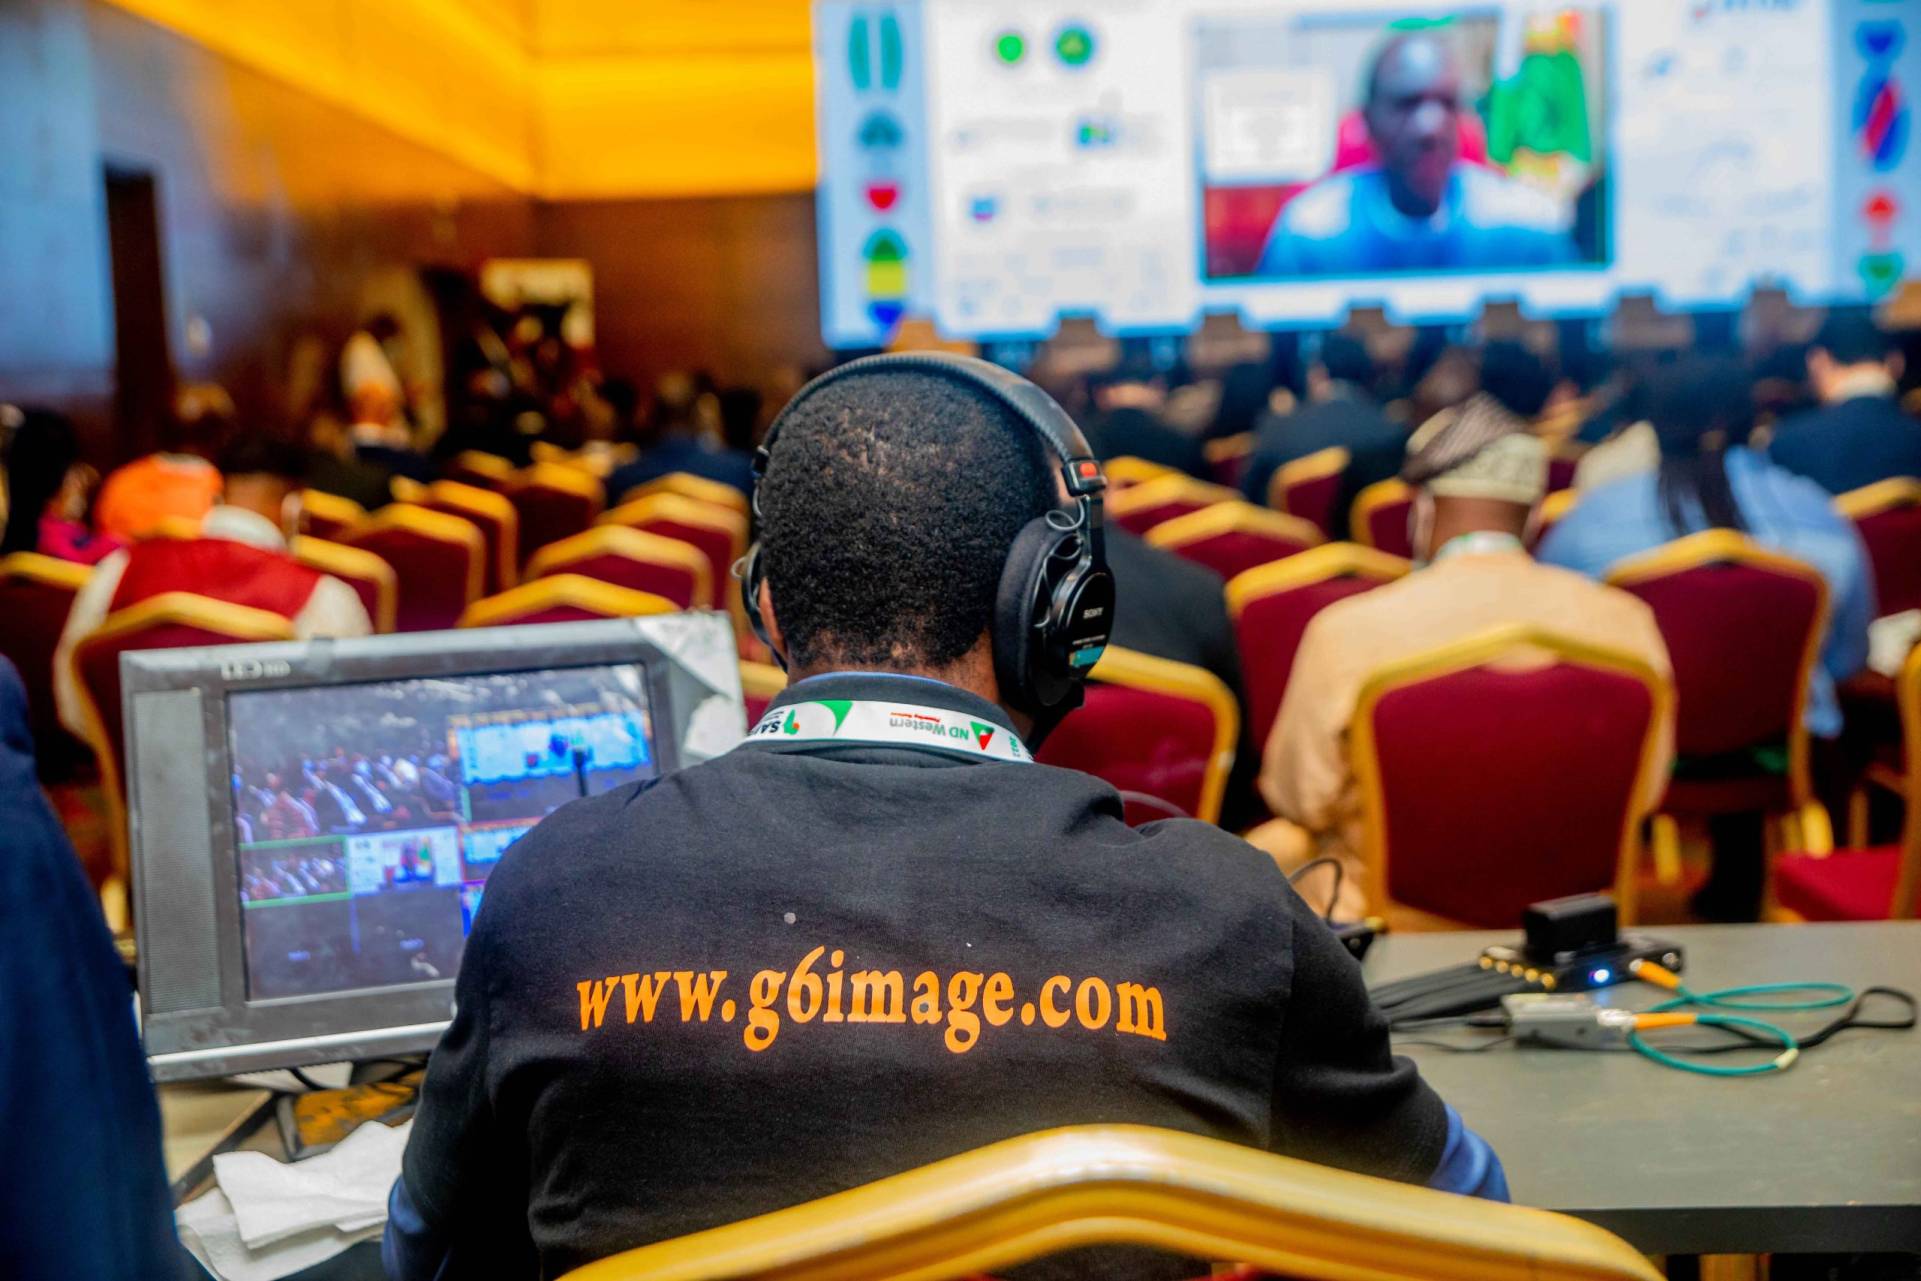 Live Streaming Service Company in Lagos Nigeria